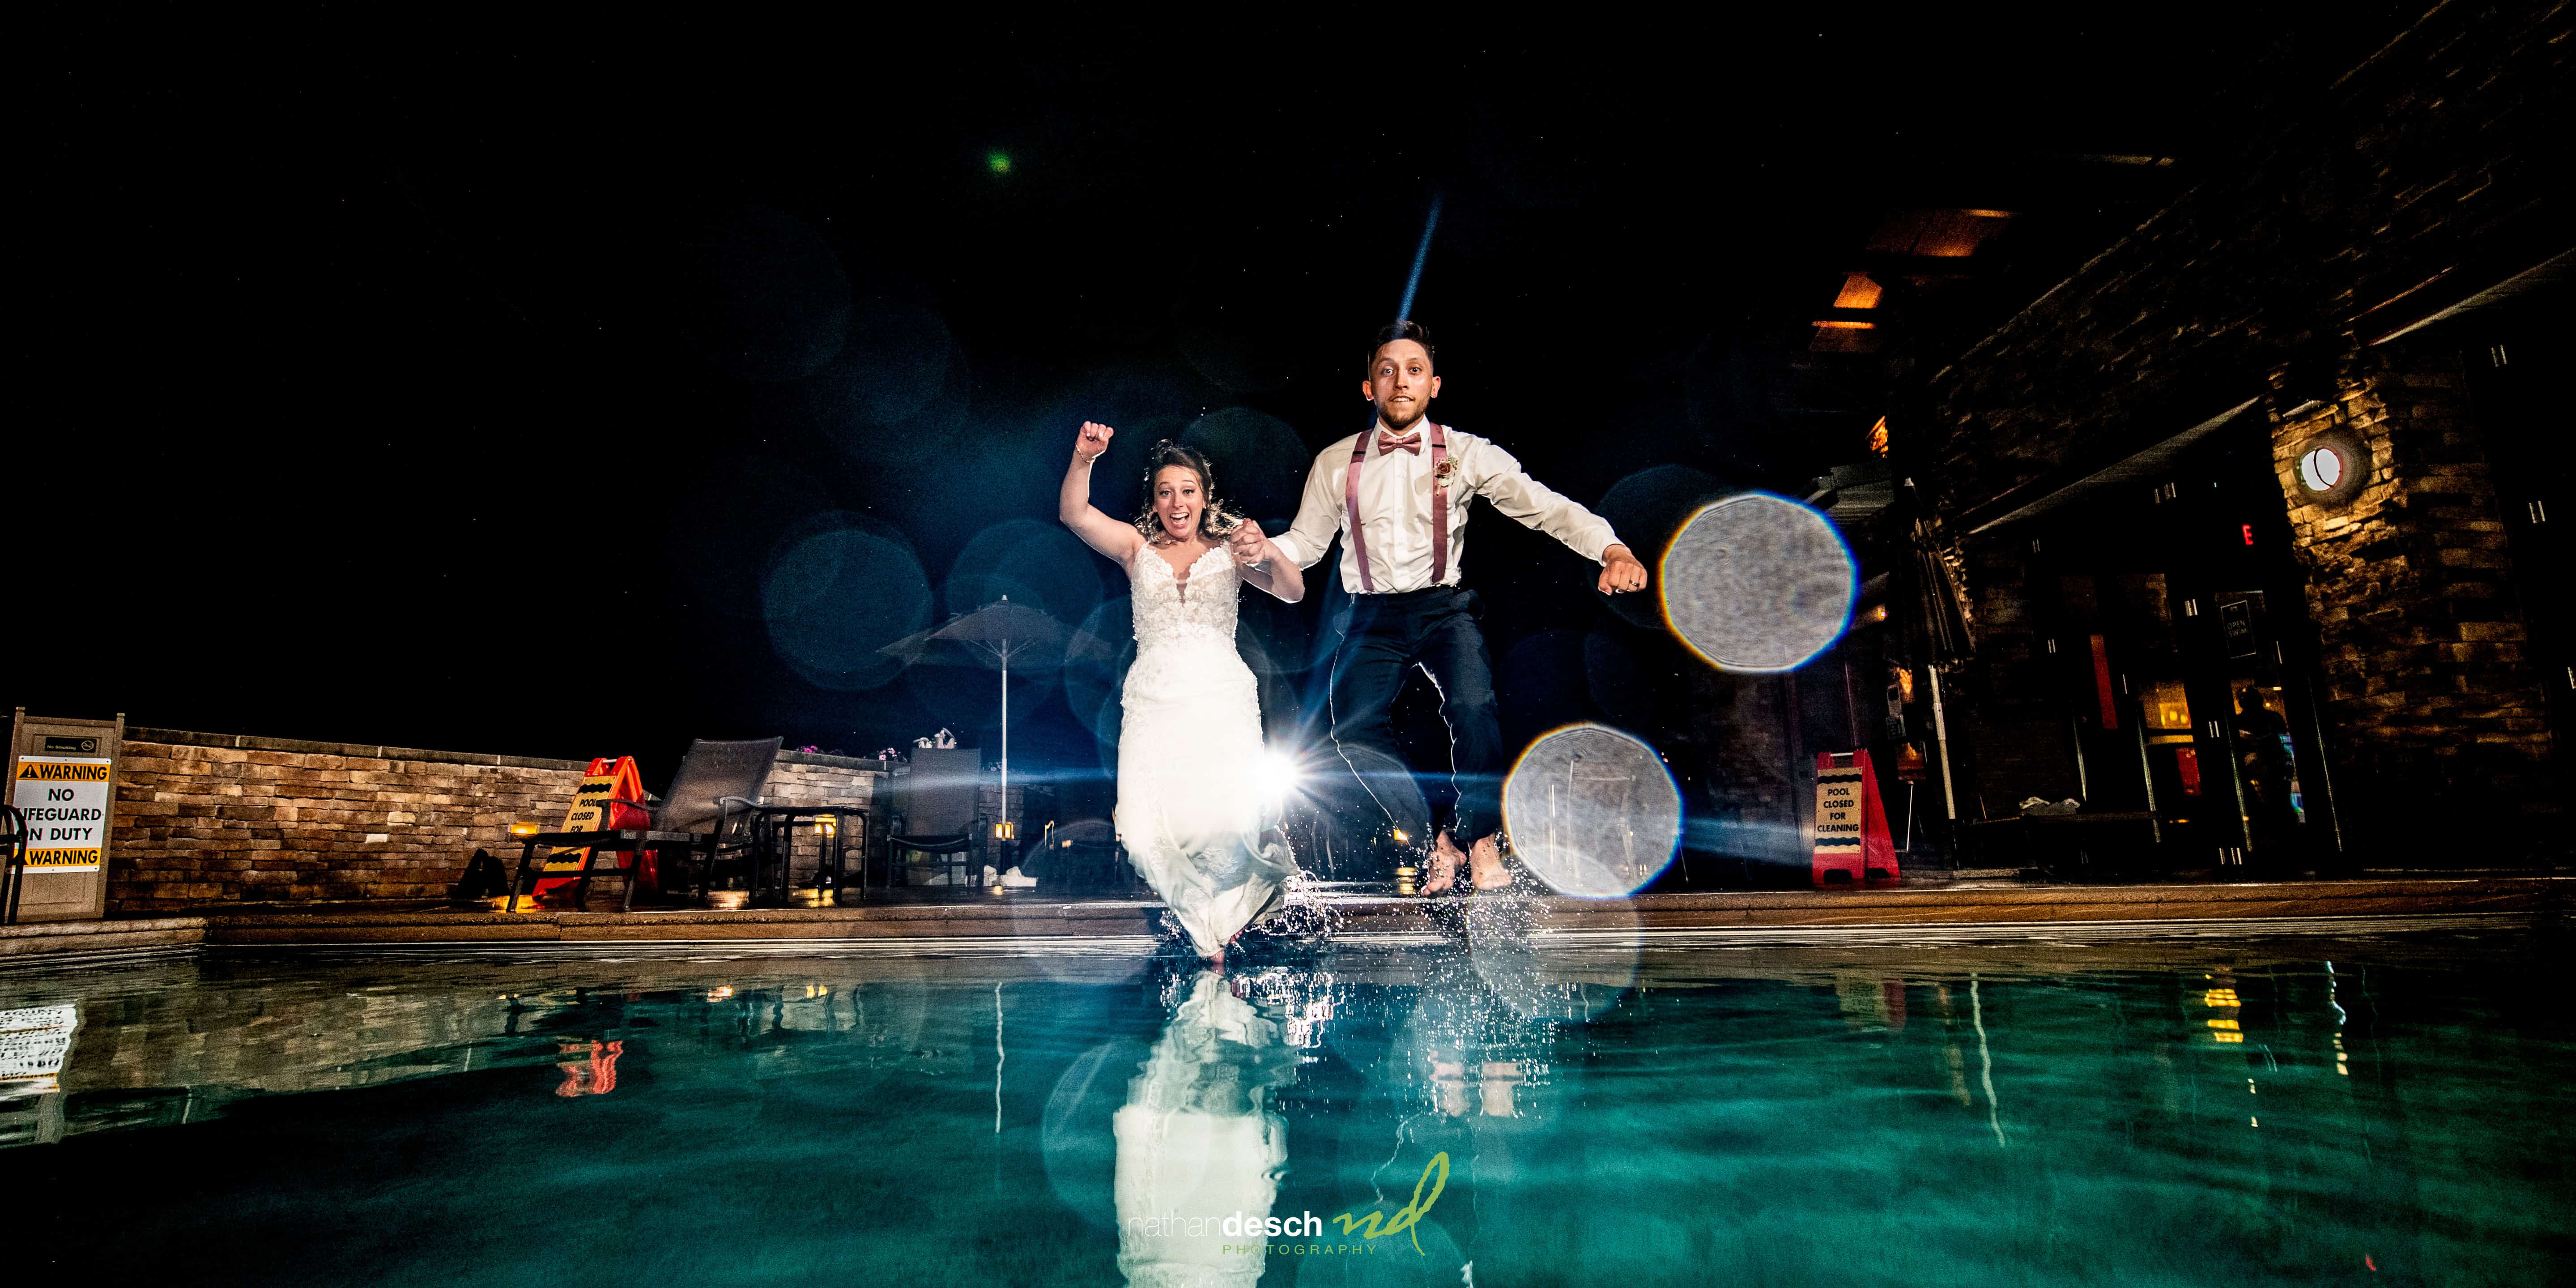 Bride and groom jumping into pool at bear creek